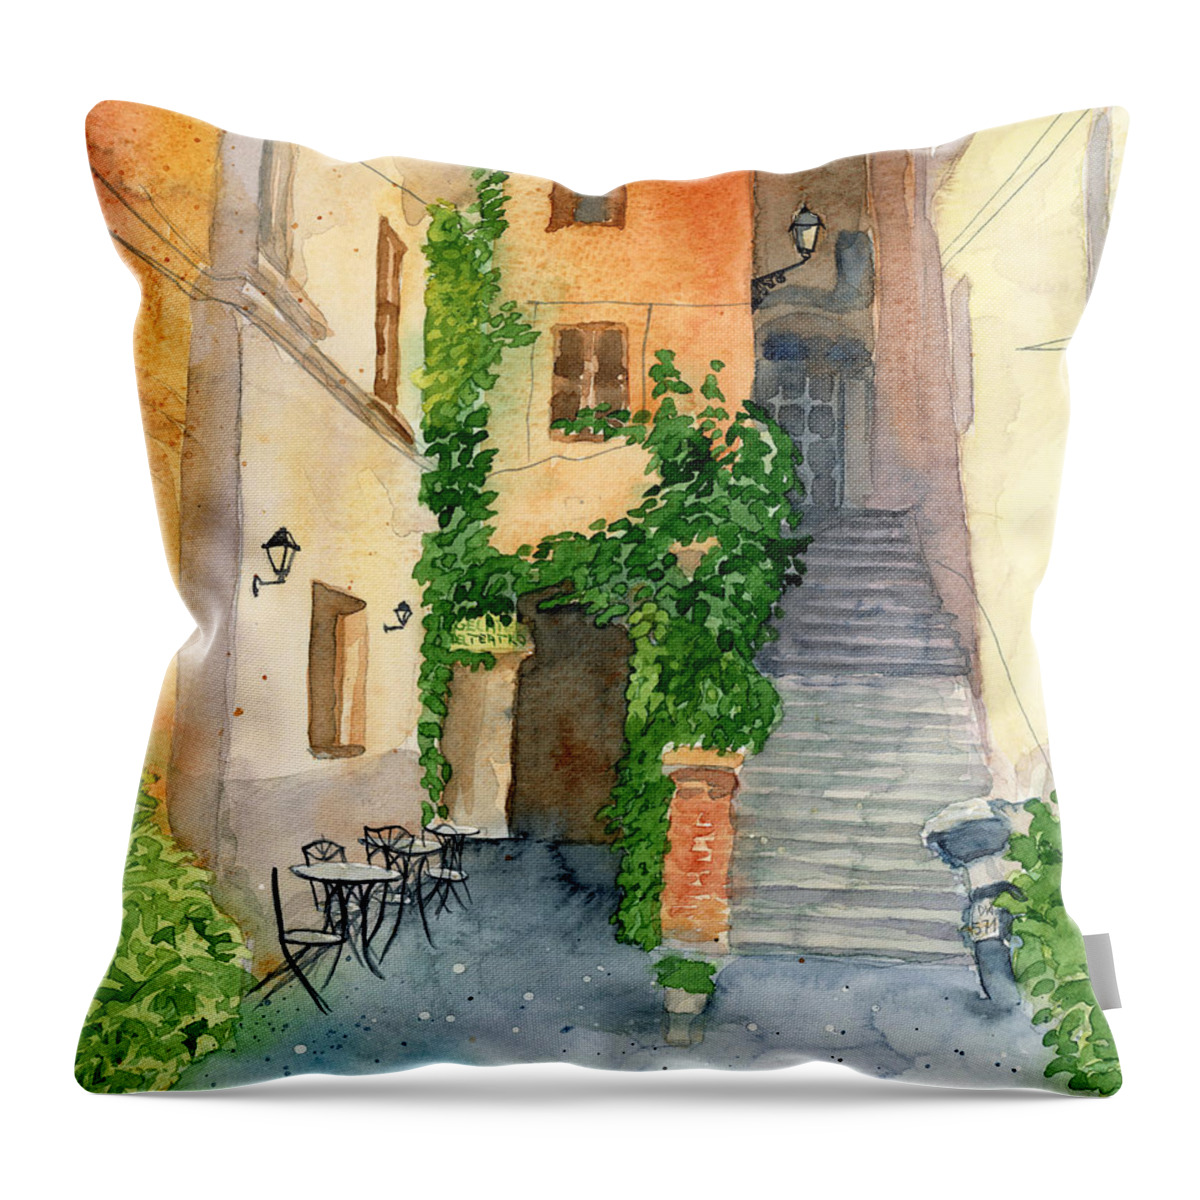 Via Dei Coronari Throw Pillow featuring the painting Via dei Coronari by Espero Art